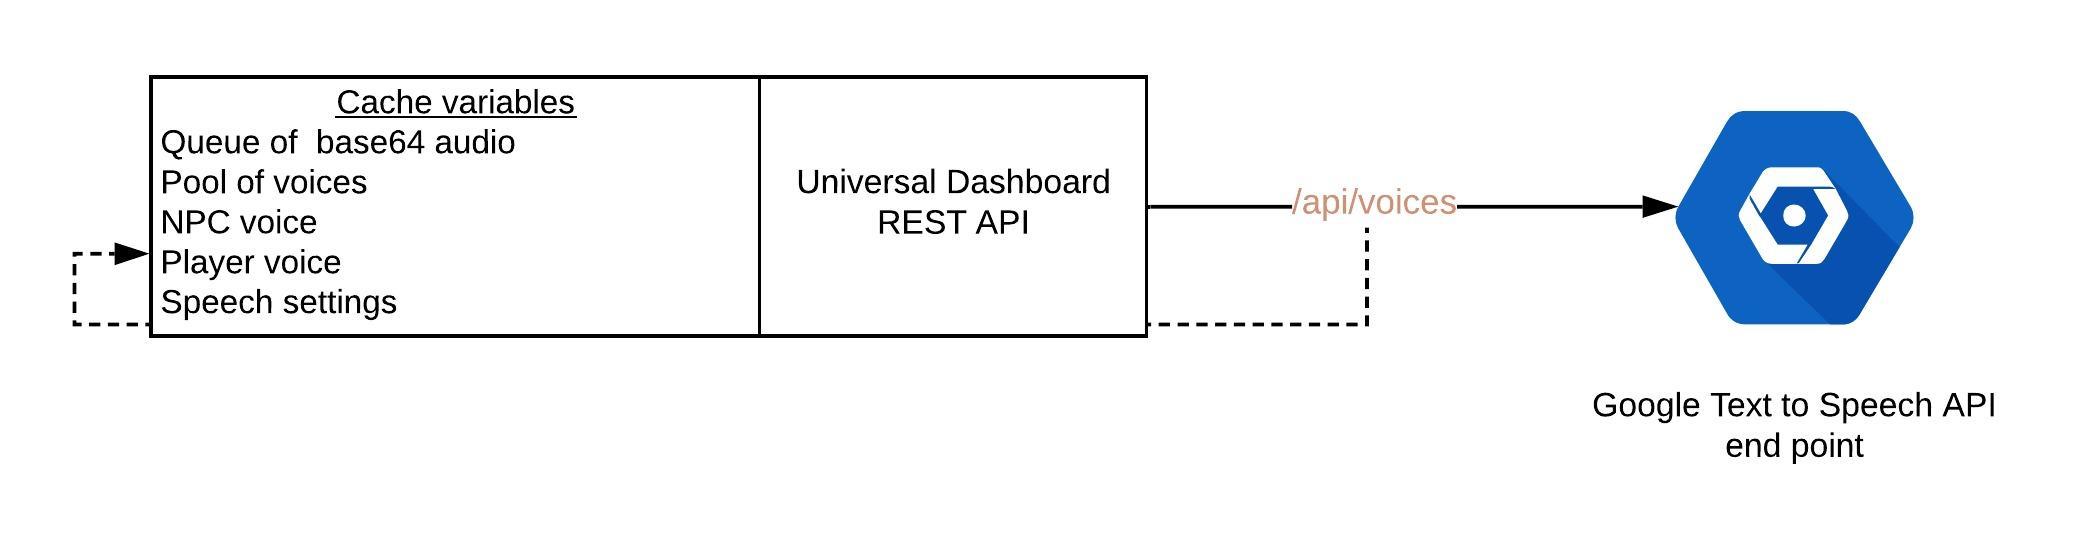 Universal dashboard API startup